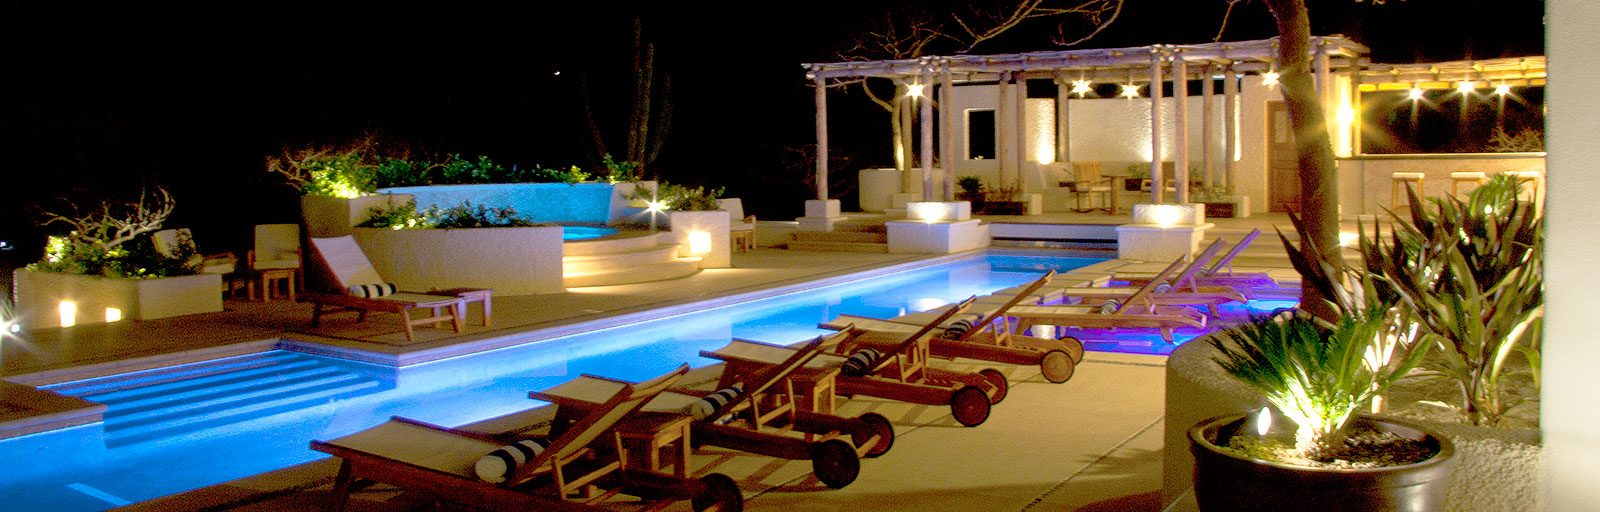 Mexico Yoga Retreats & Wellness Center: Swimming Pool and Hot Tub at Night